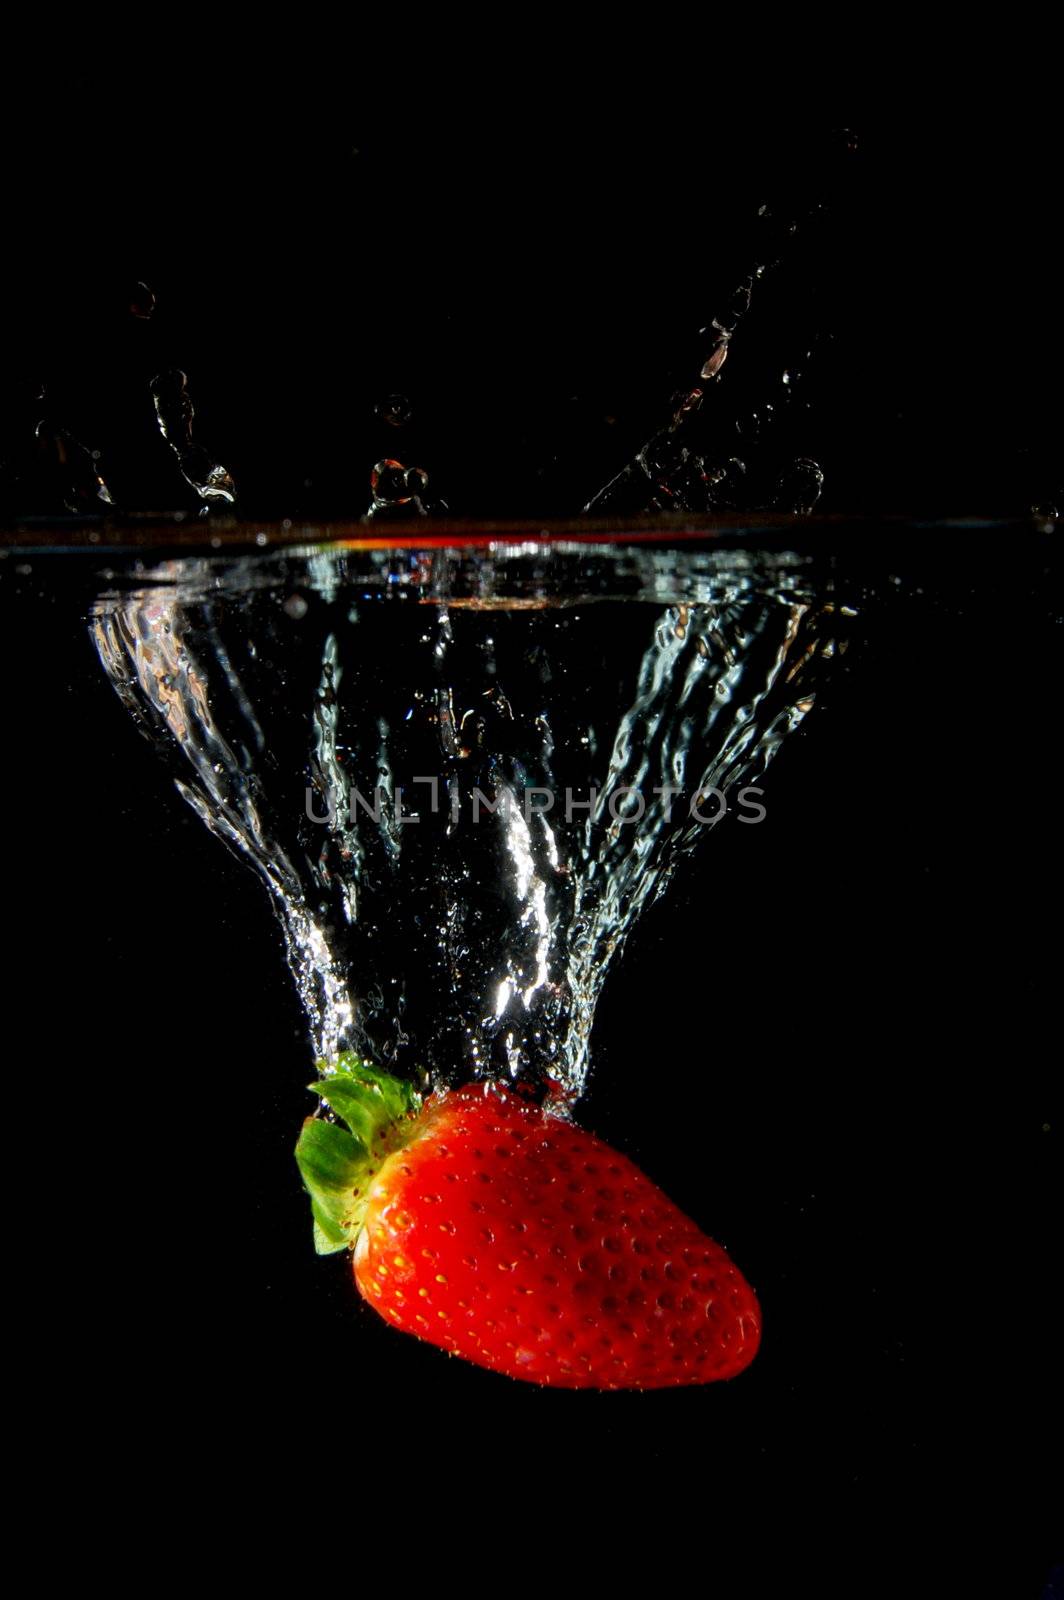 strawberrys splashing in fresh water showing healthy lifestyle